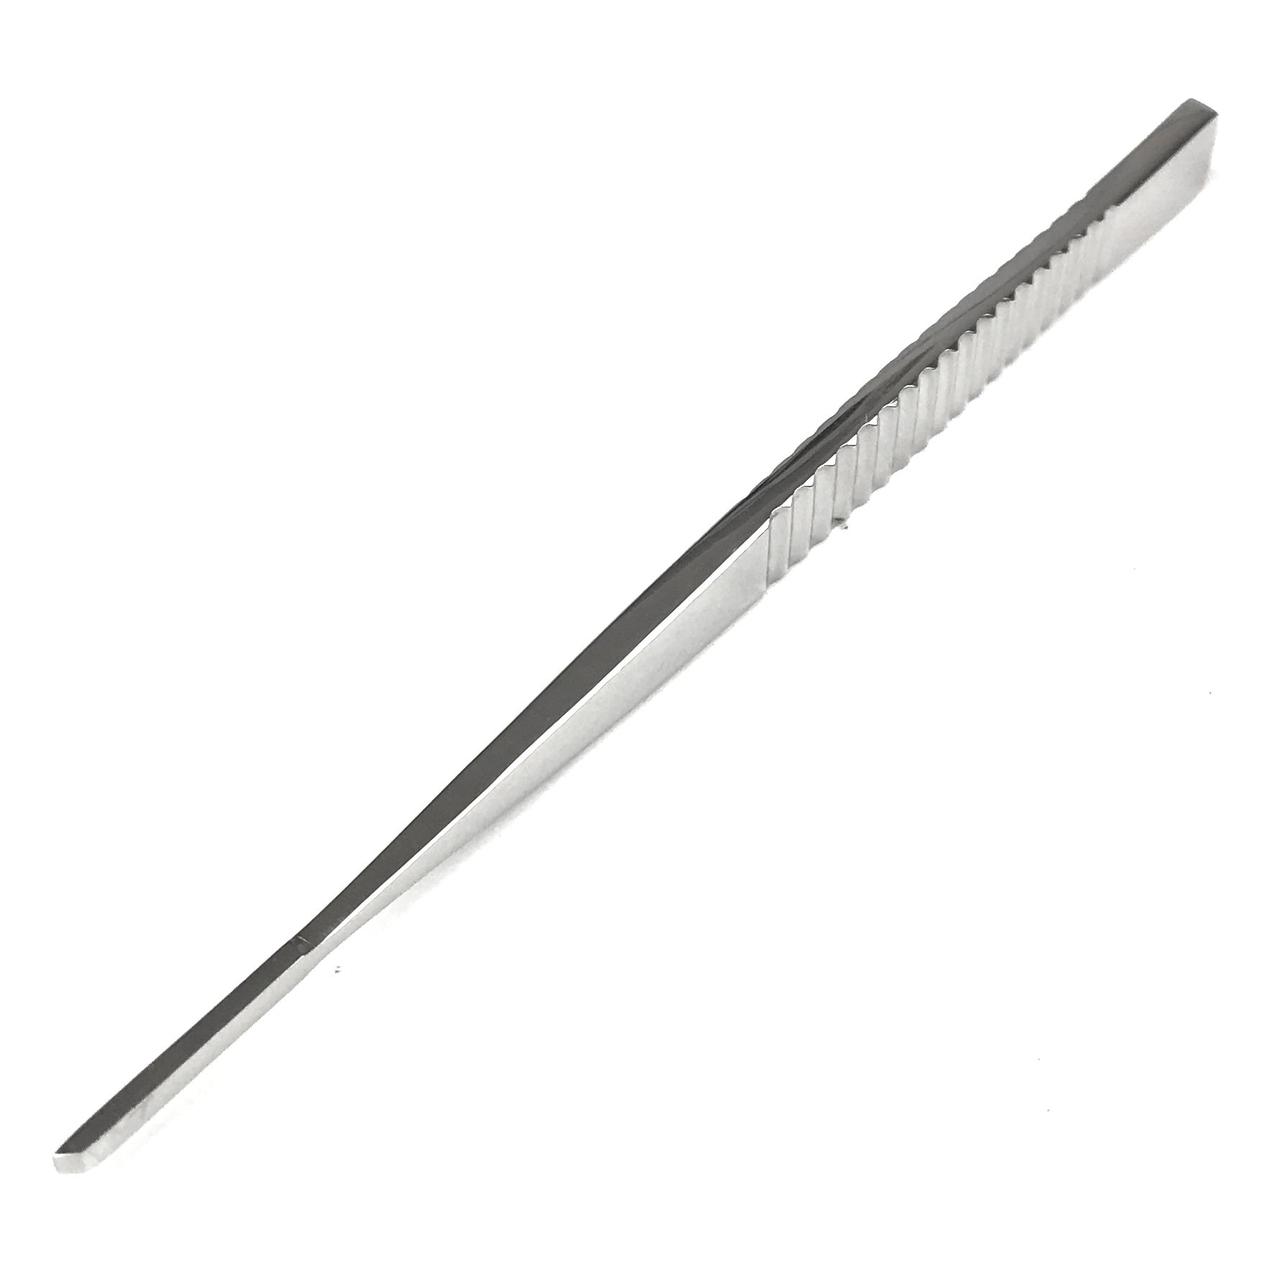 Долото плоске з рифленою ручкою по Partsch. Довжина 13,5 см, ширина 2,5 мм